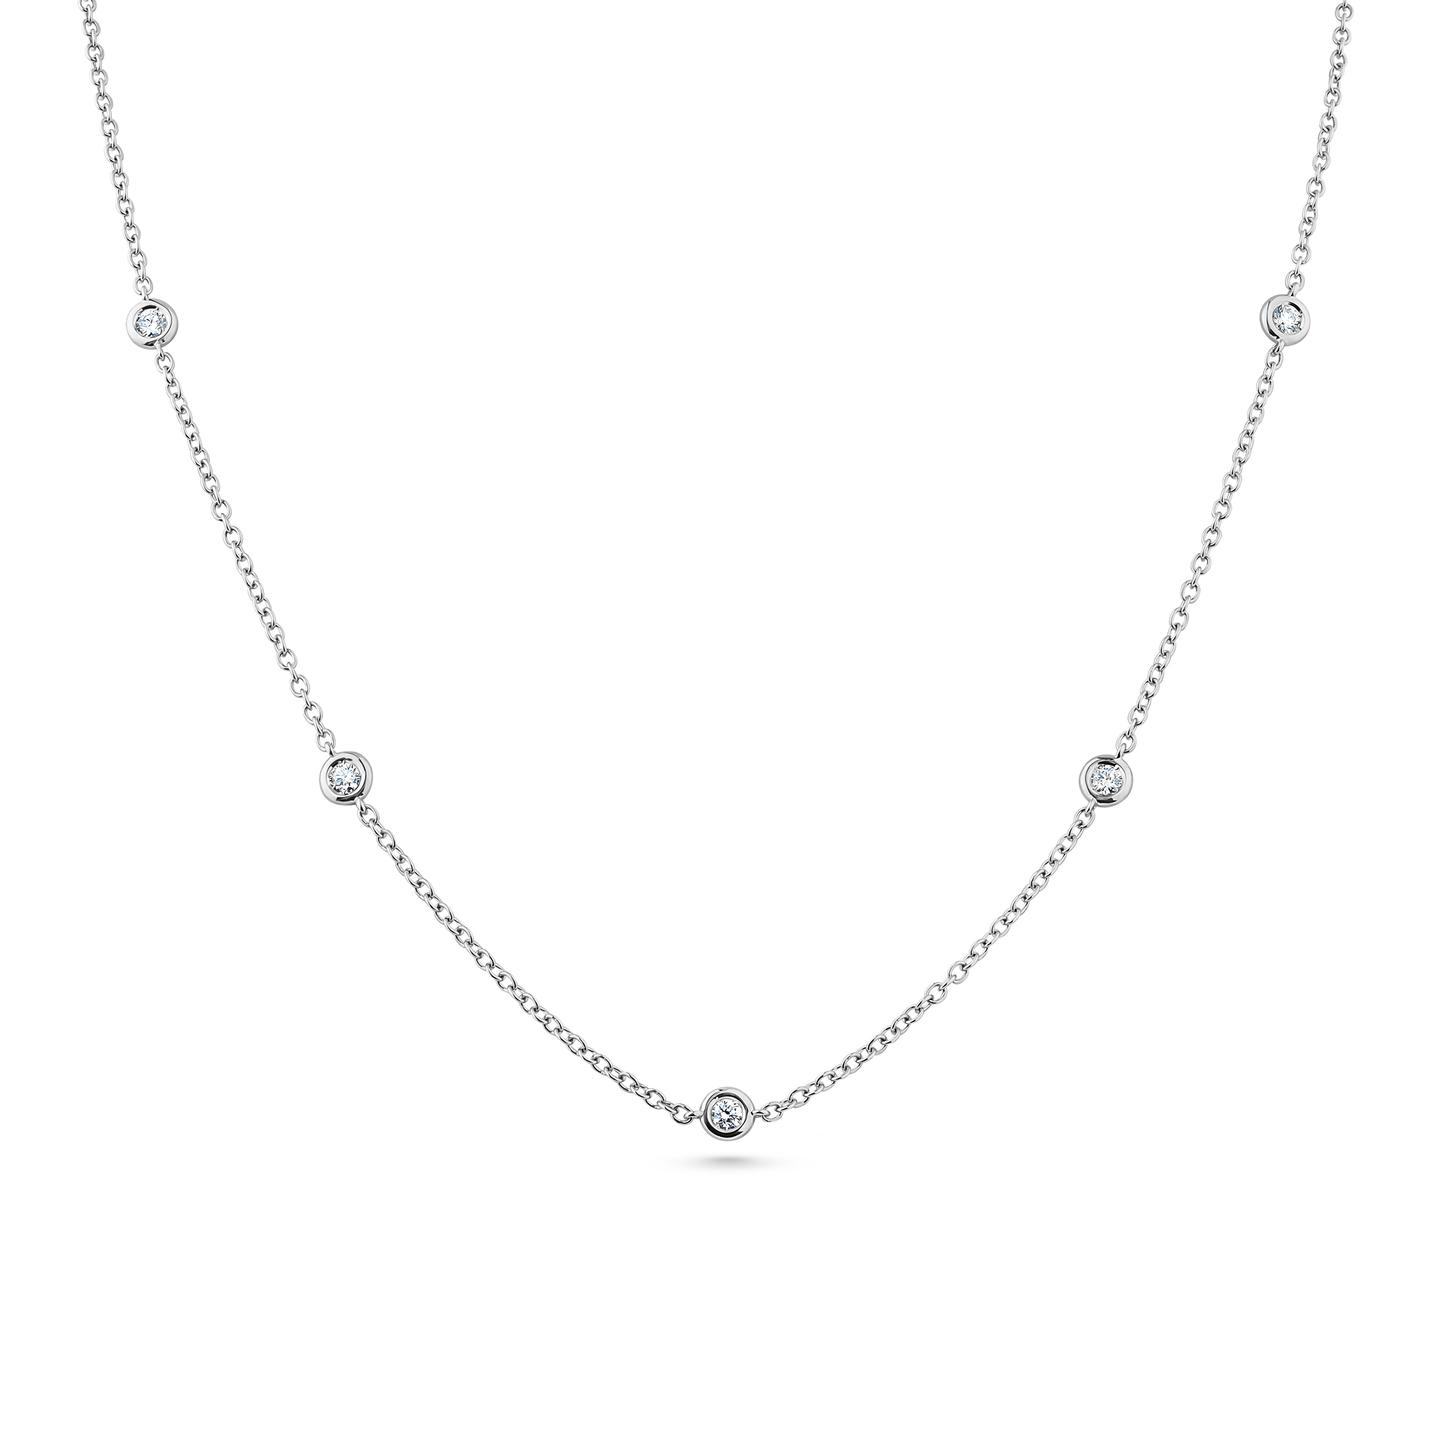 Oliver Heemeyer Starlight diamond necklace 42,0 cm made of 18k white gold.